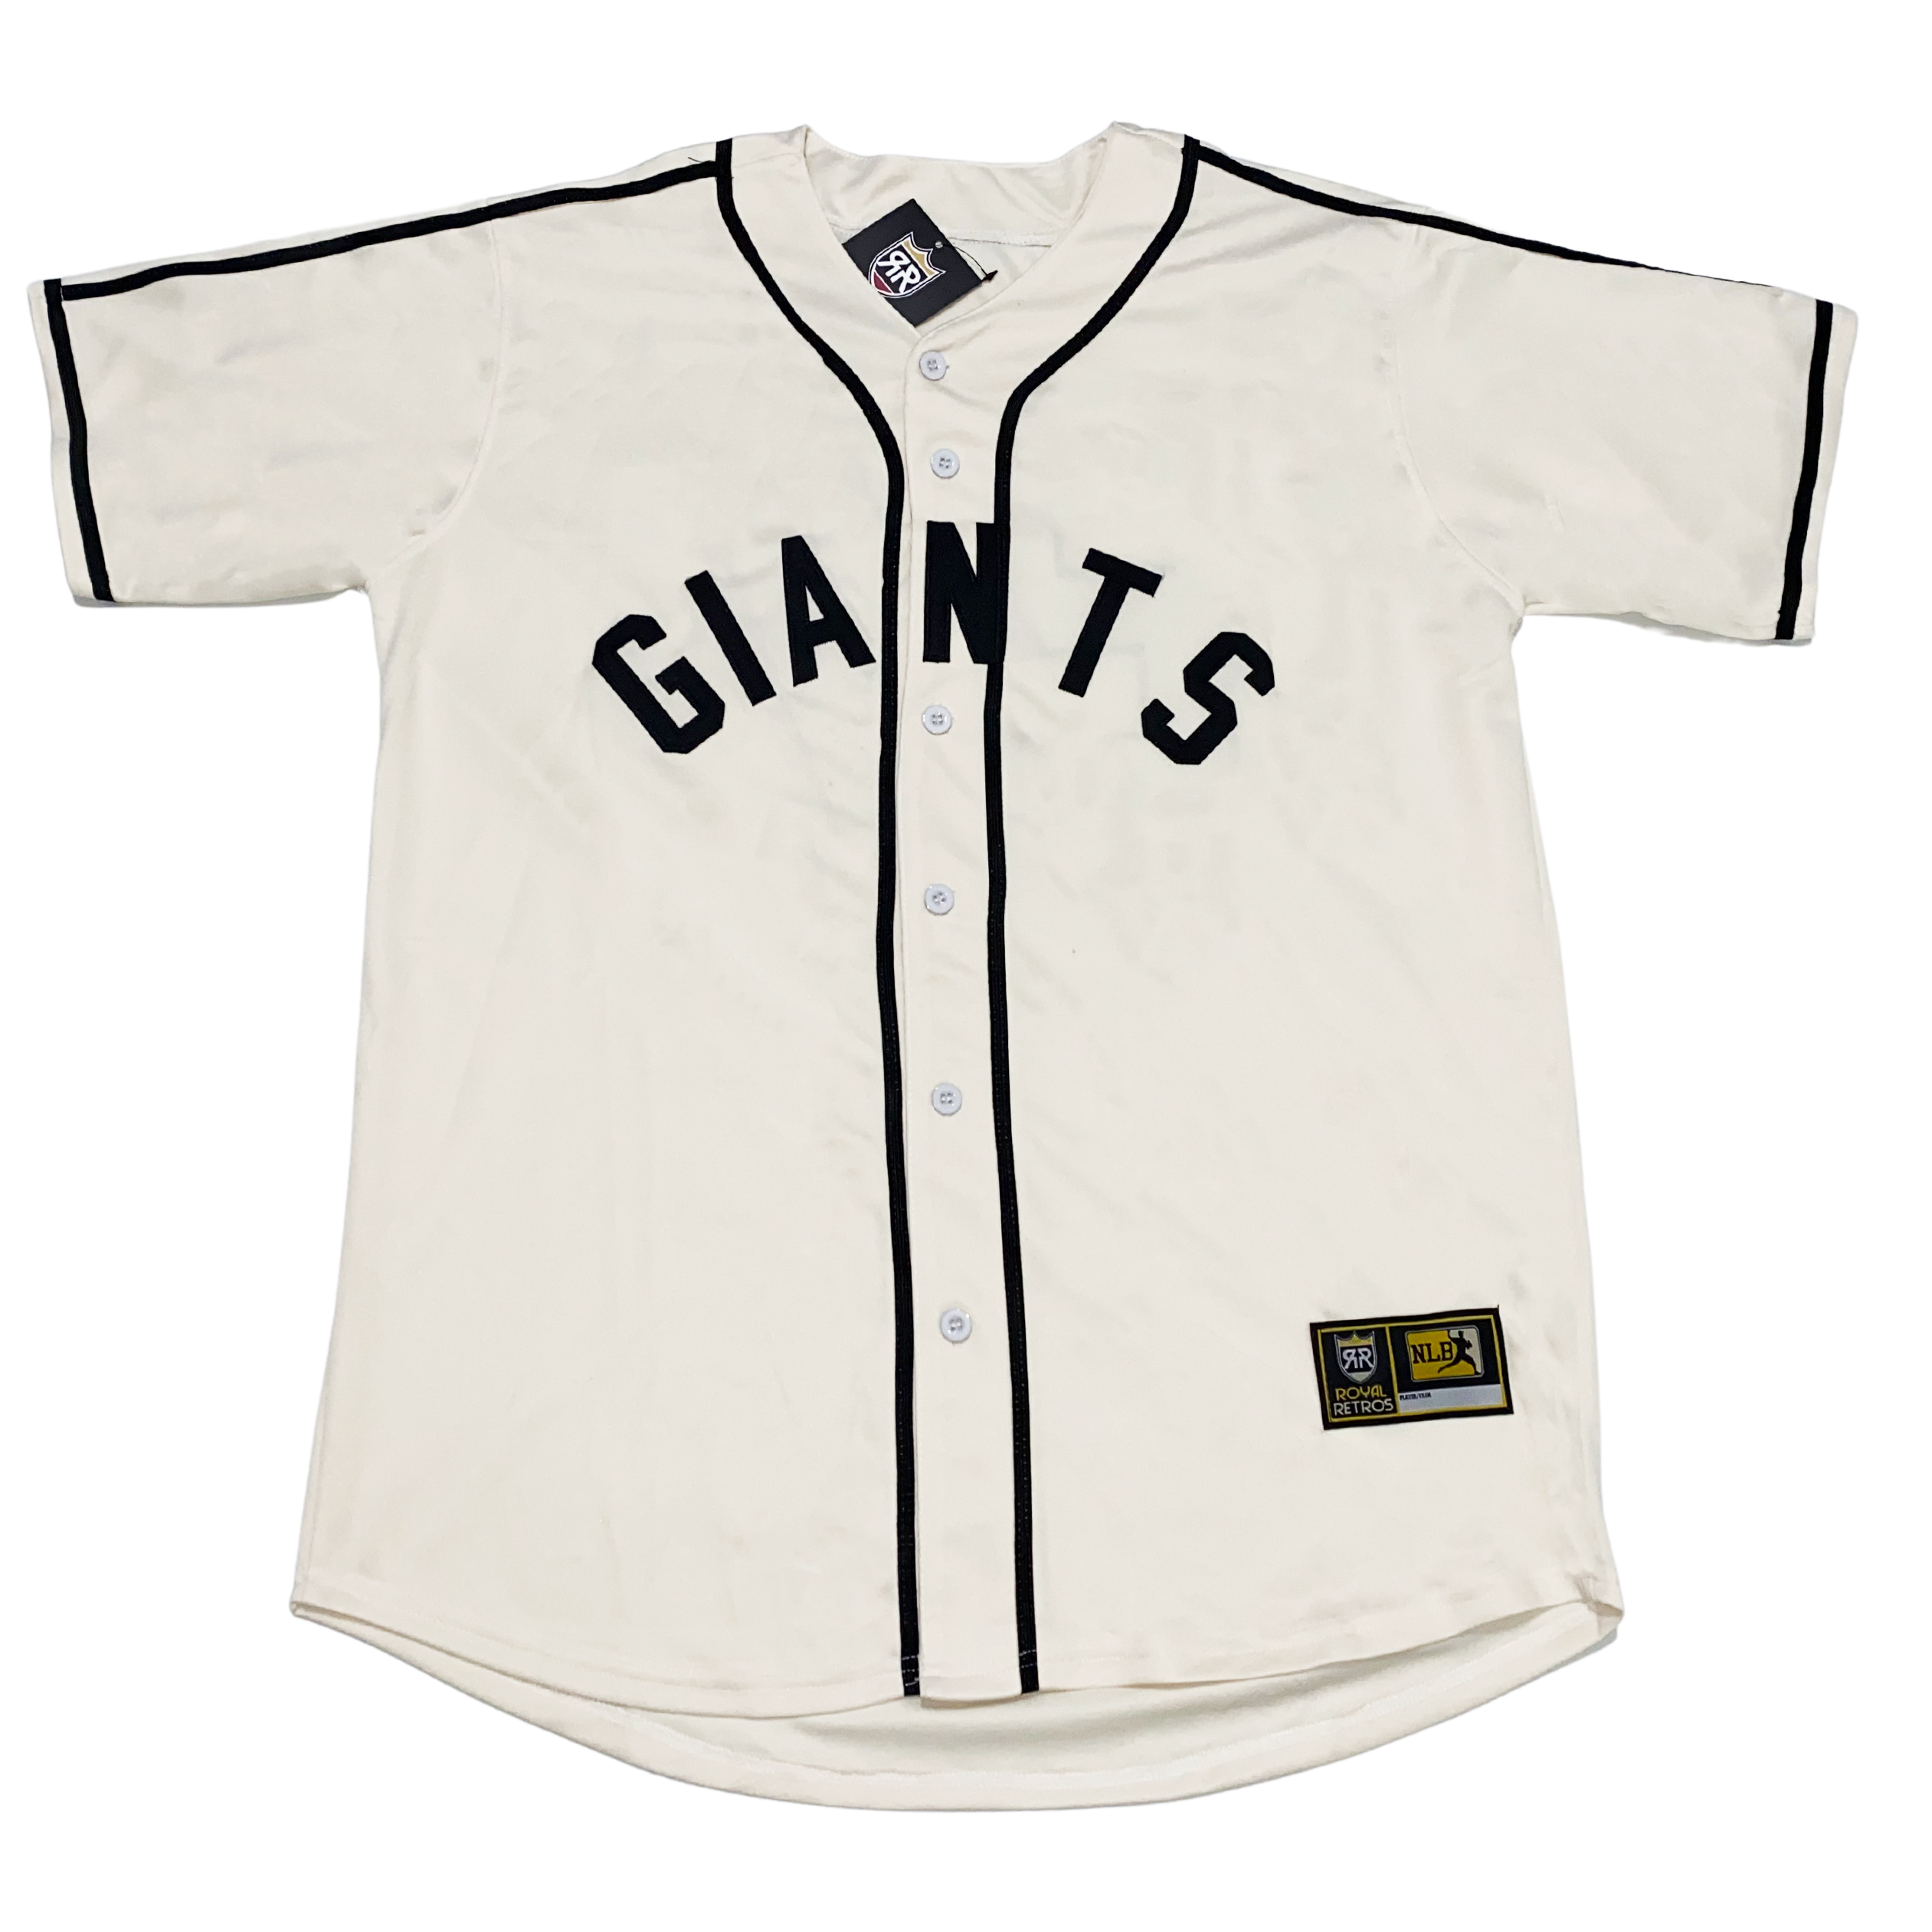 Miami Giants, Negro League, Rings & Crowns Mesh Replica Jersey #8 Size XL  NWT